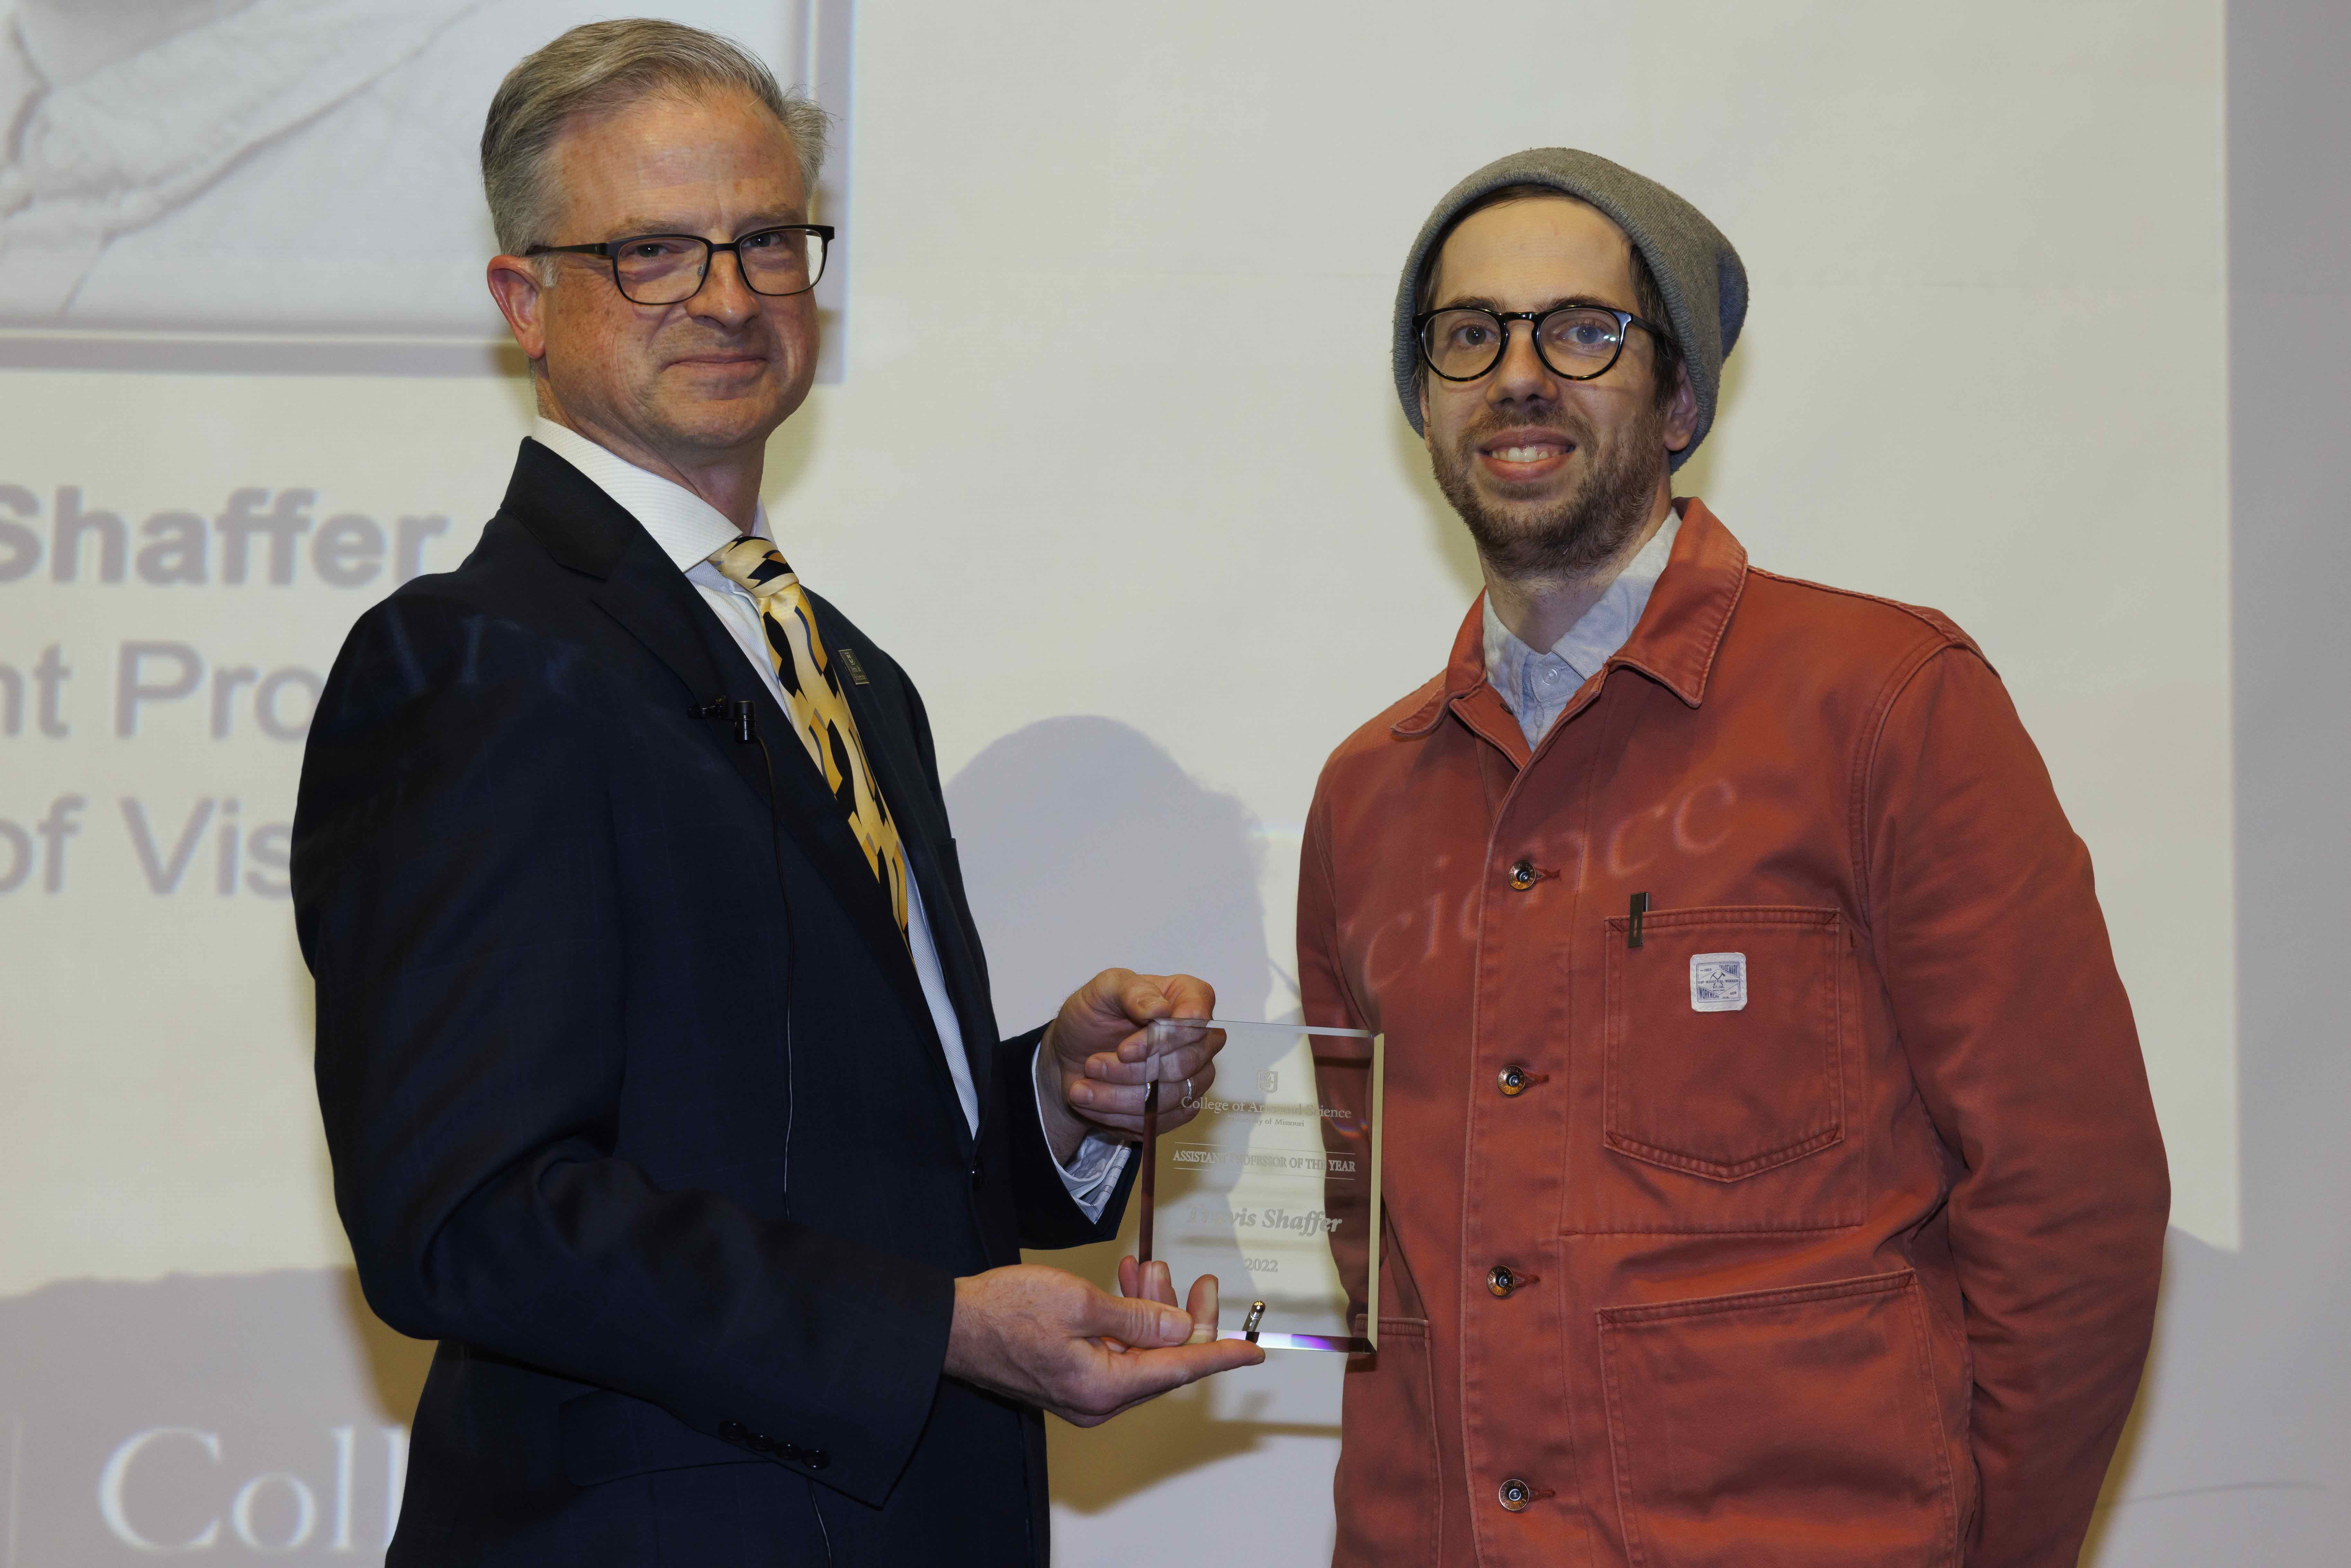 Photo of Travis Shaffer receiving his award.